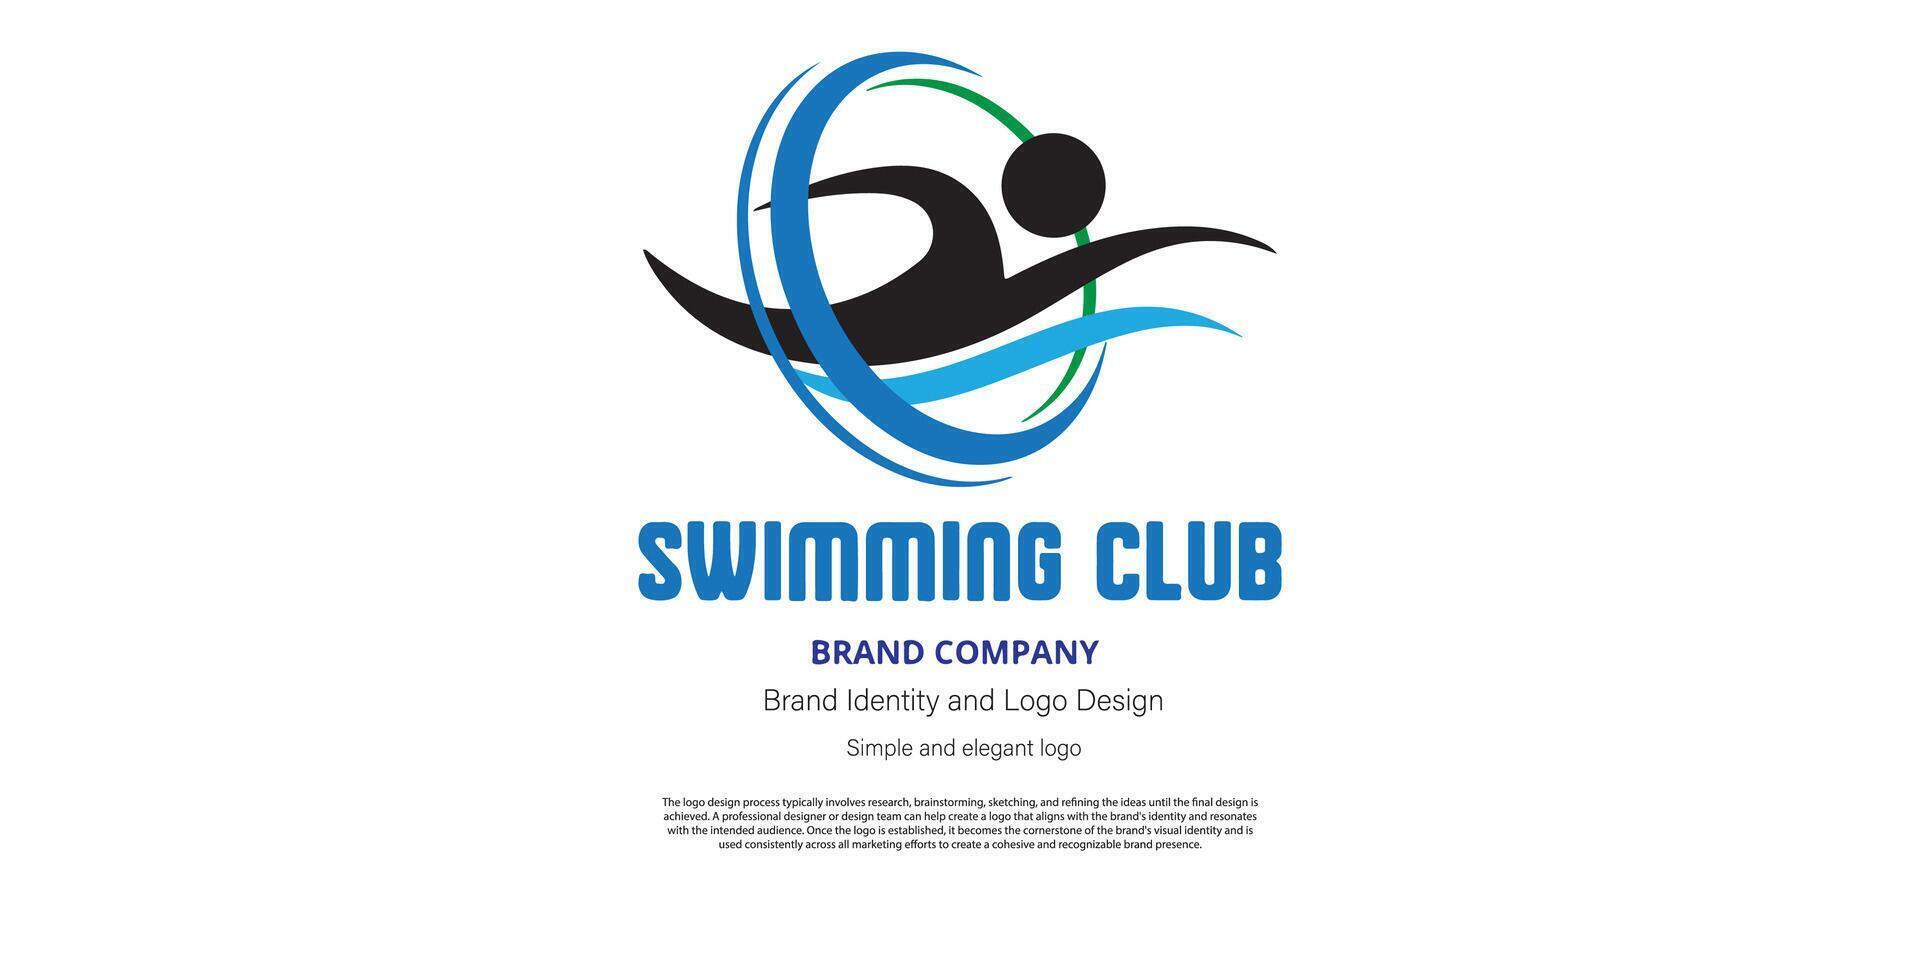 Swimming logo design for swimming club or graphic designer vector